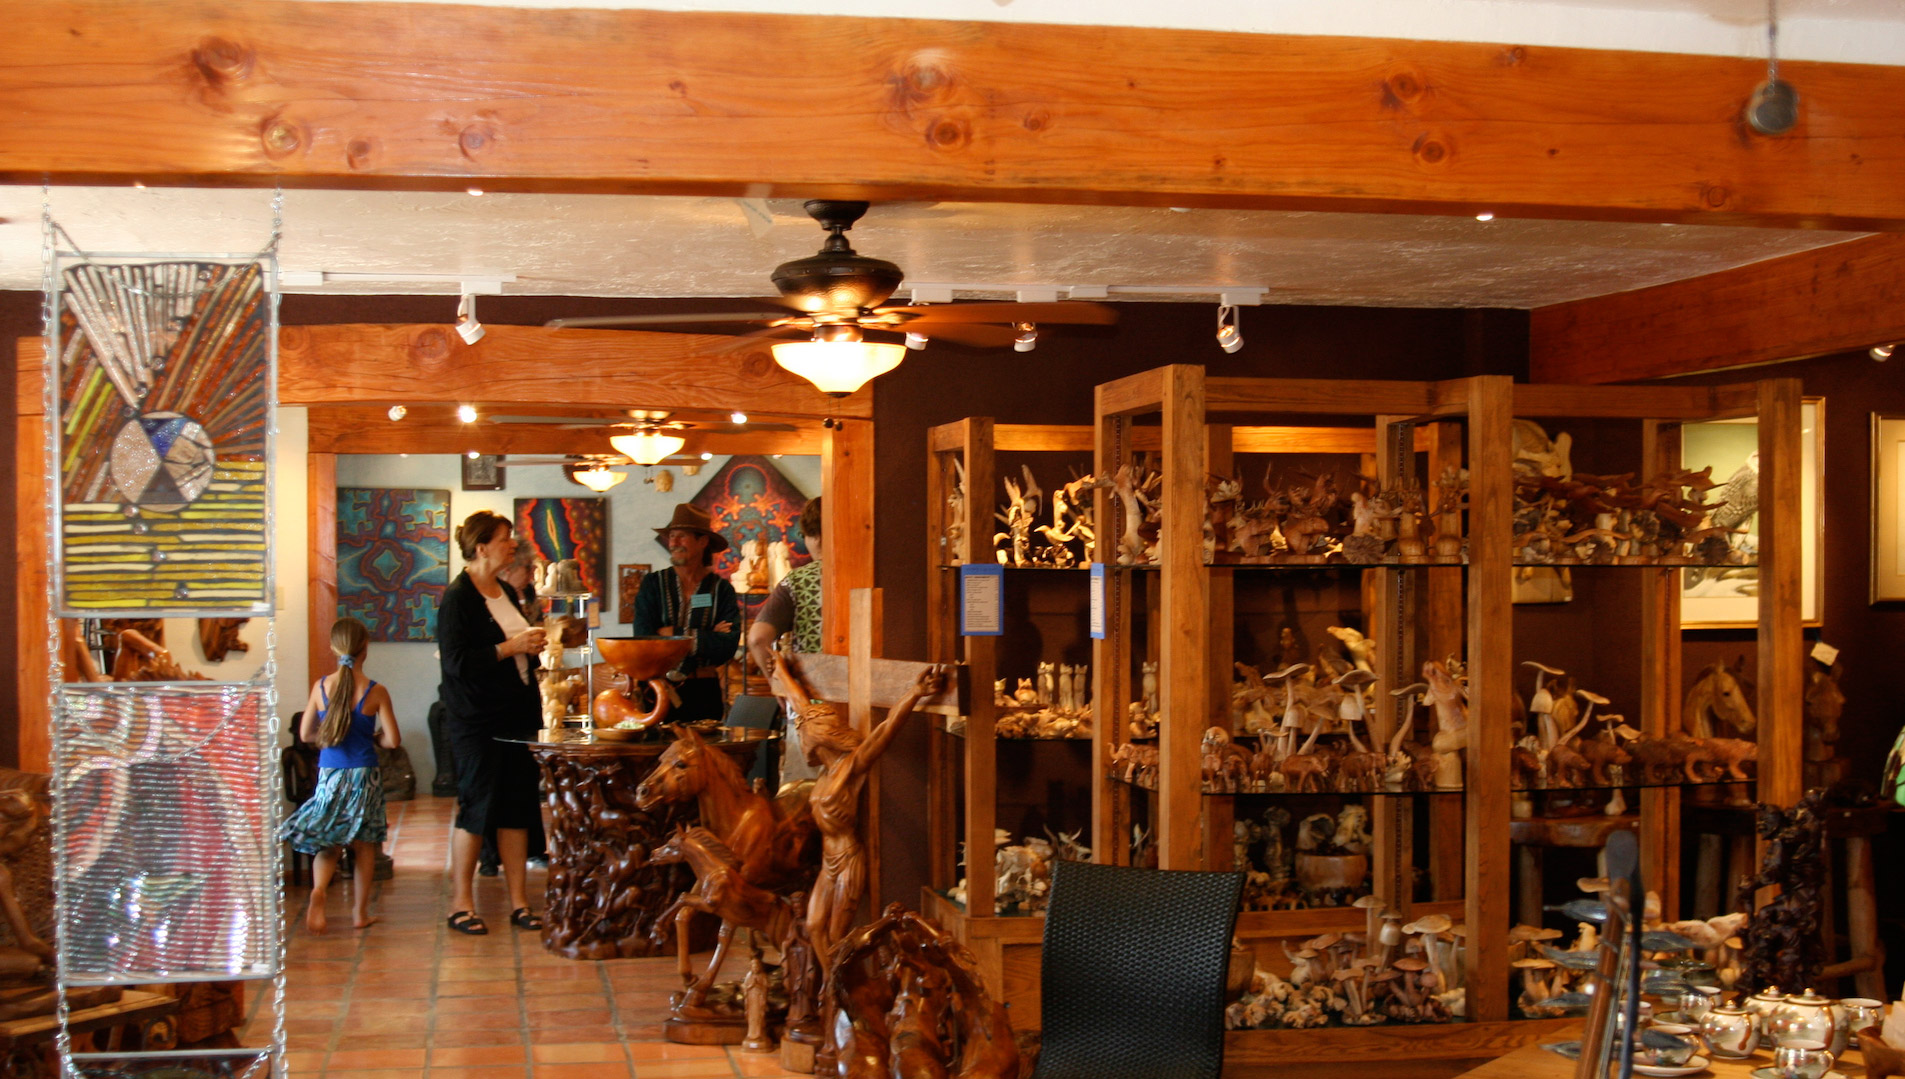 Teak wood carvings line the shelves inside Sacred Treasures.